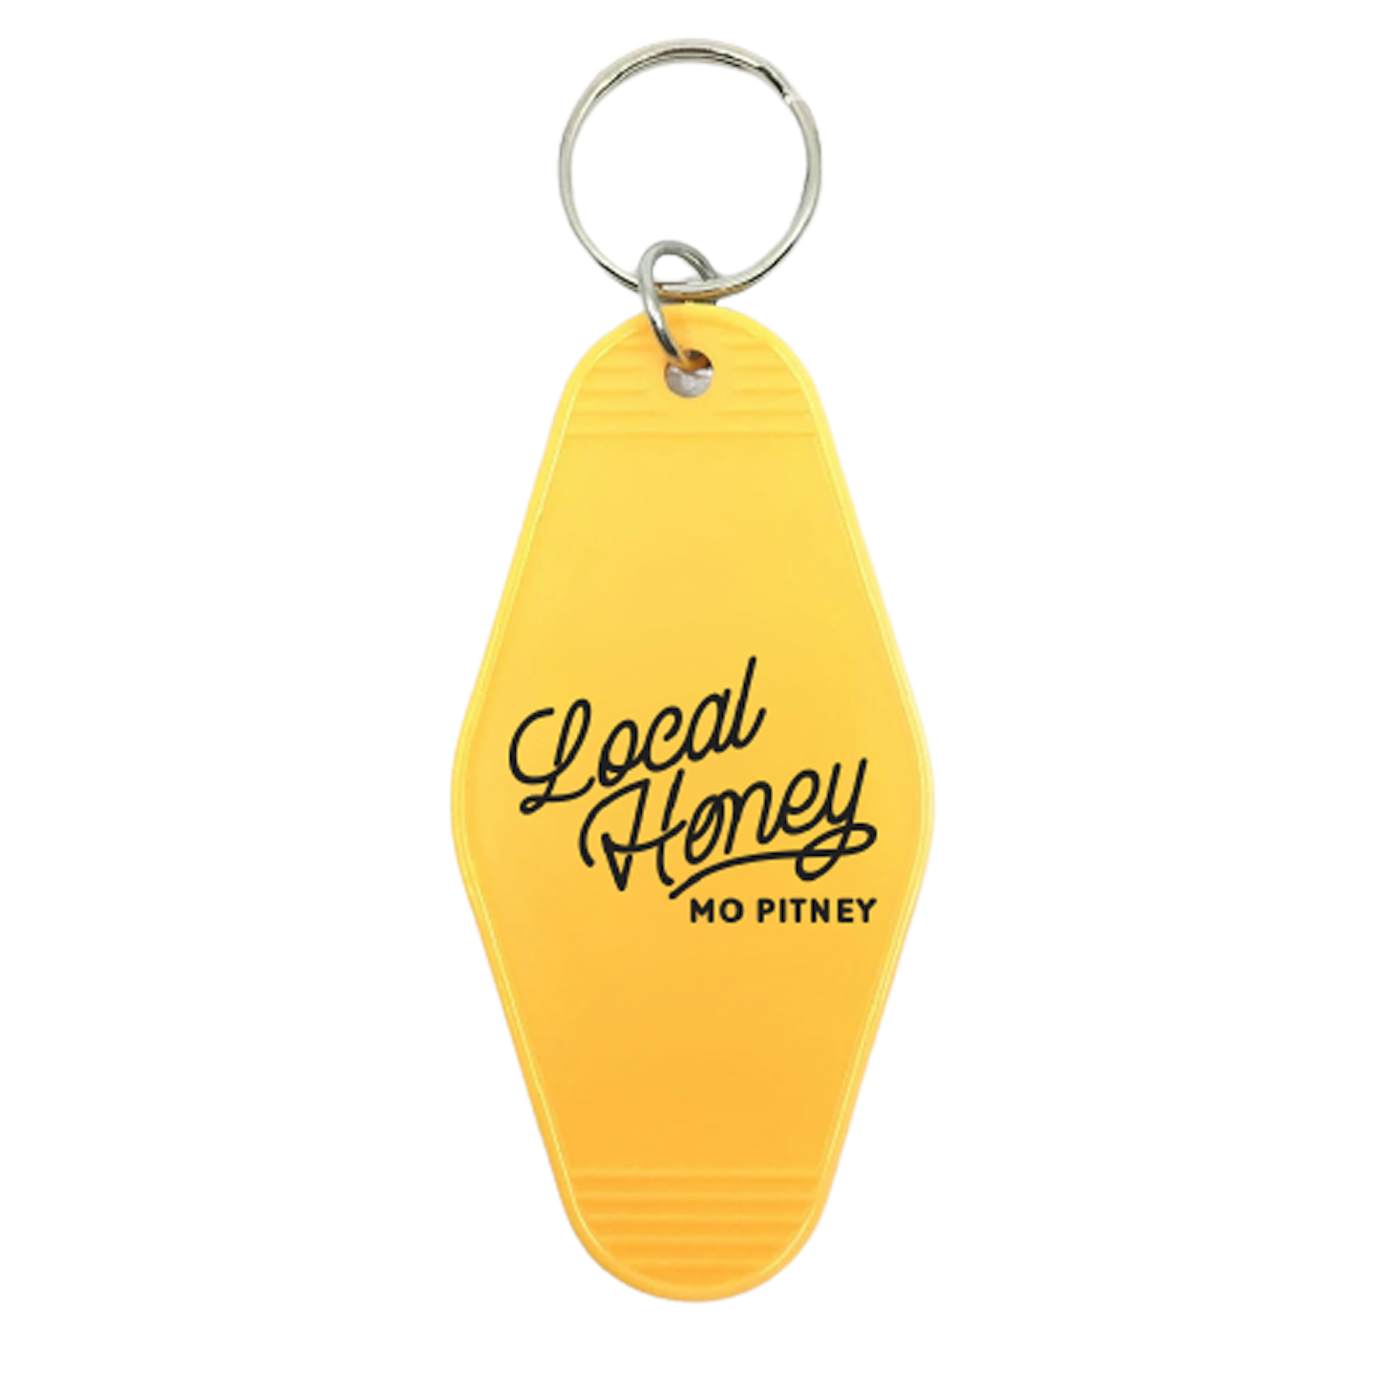 Mo Pitney Local Honey Keychain